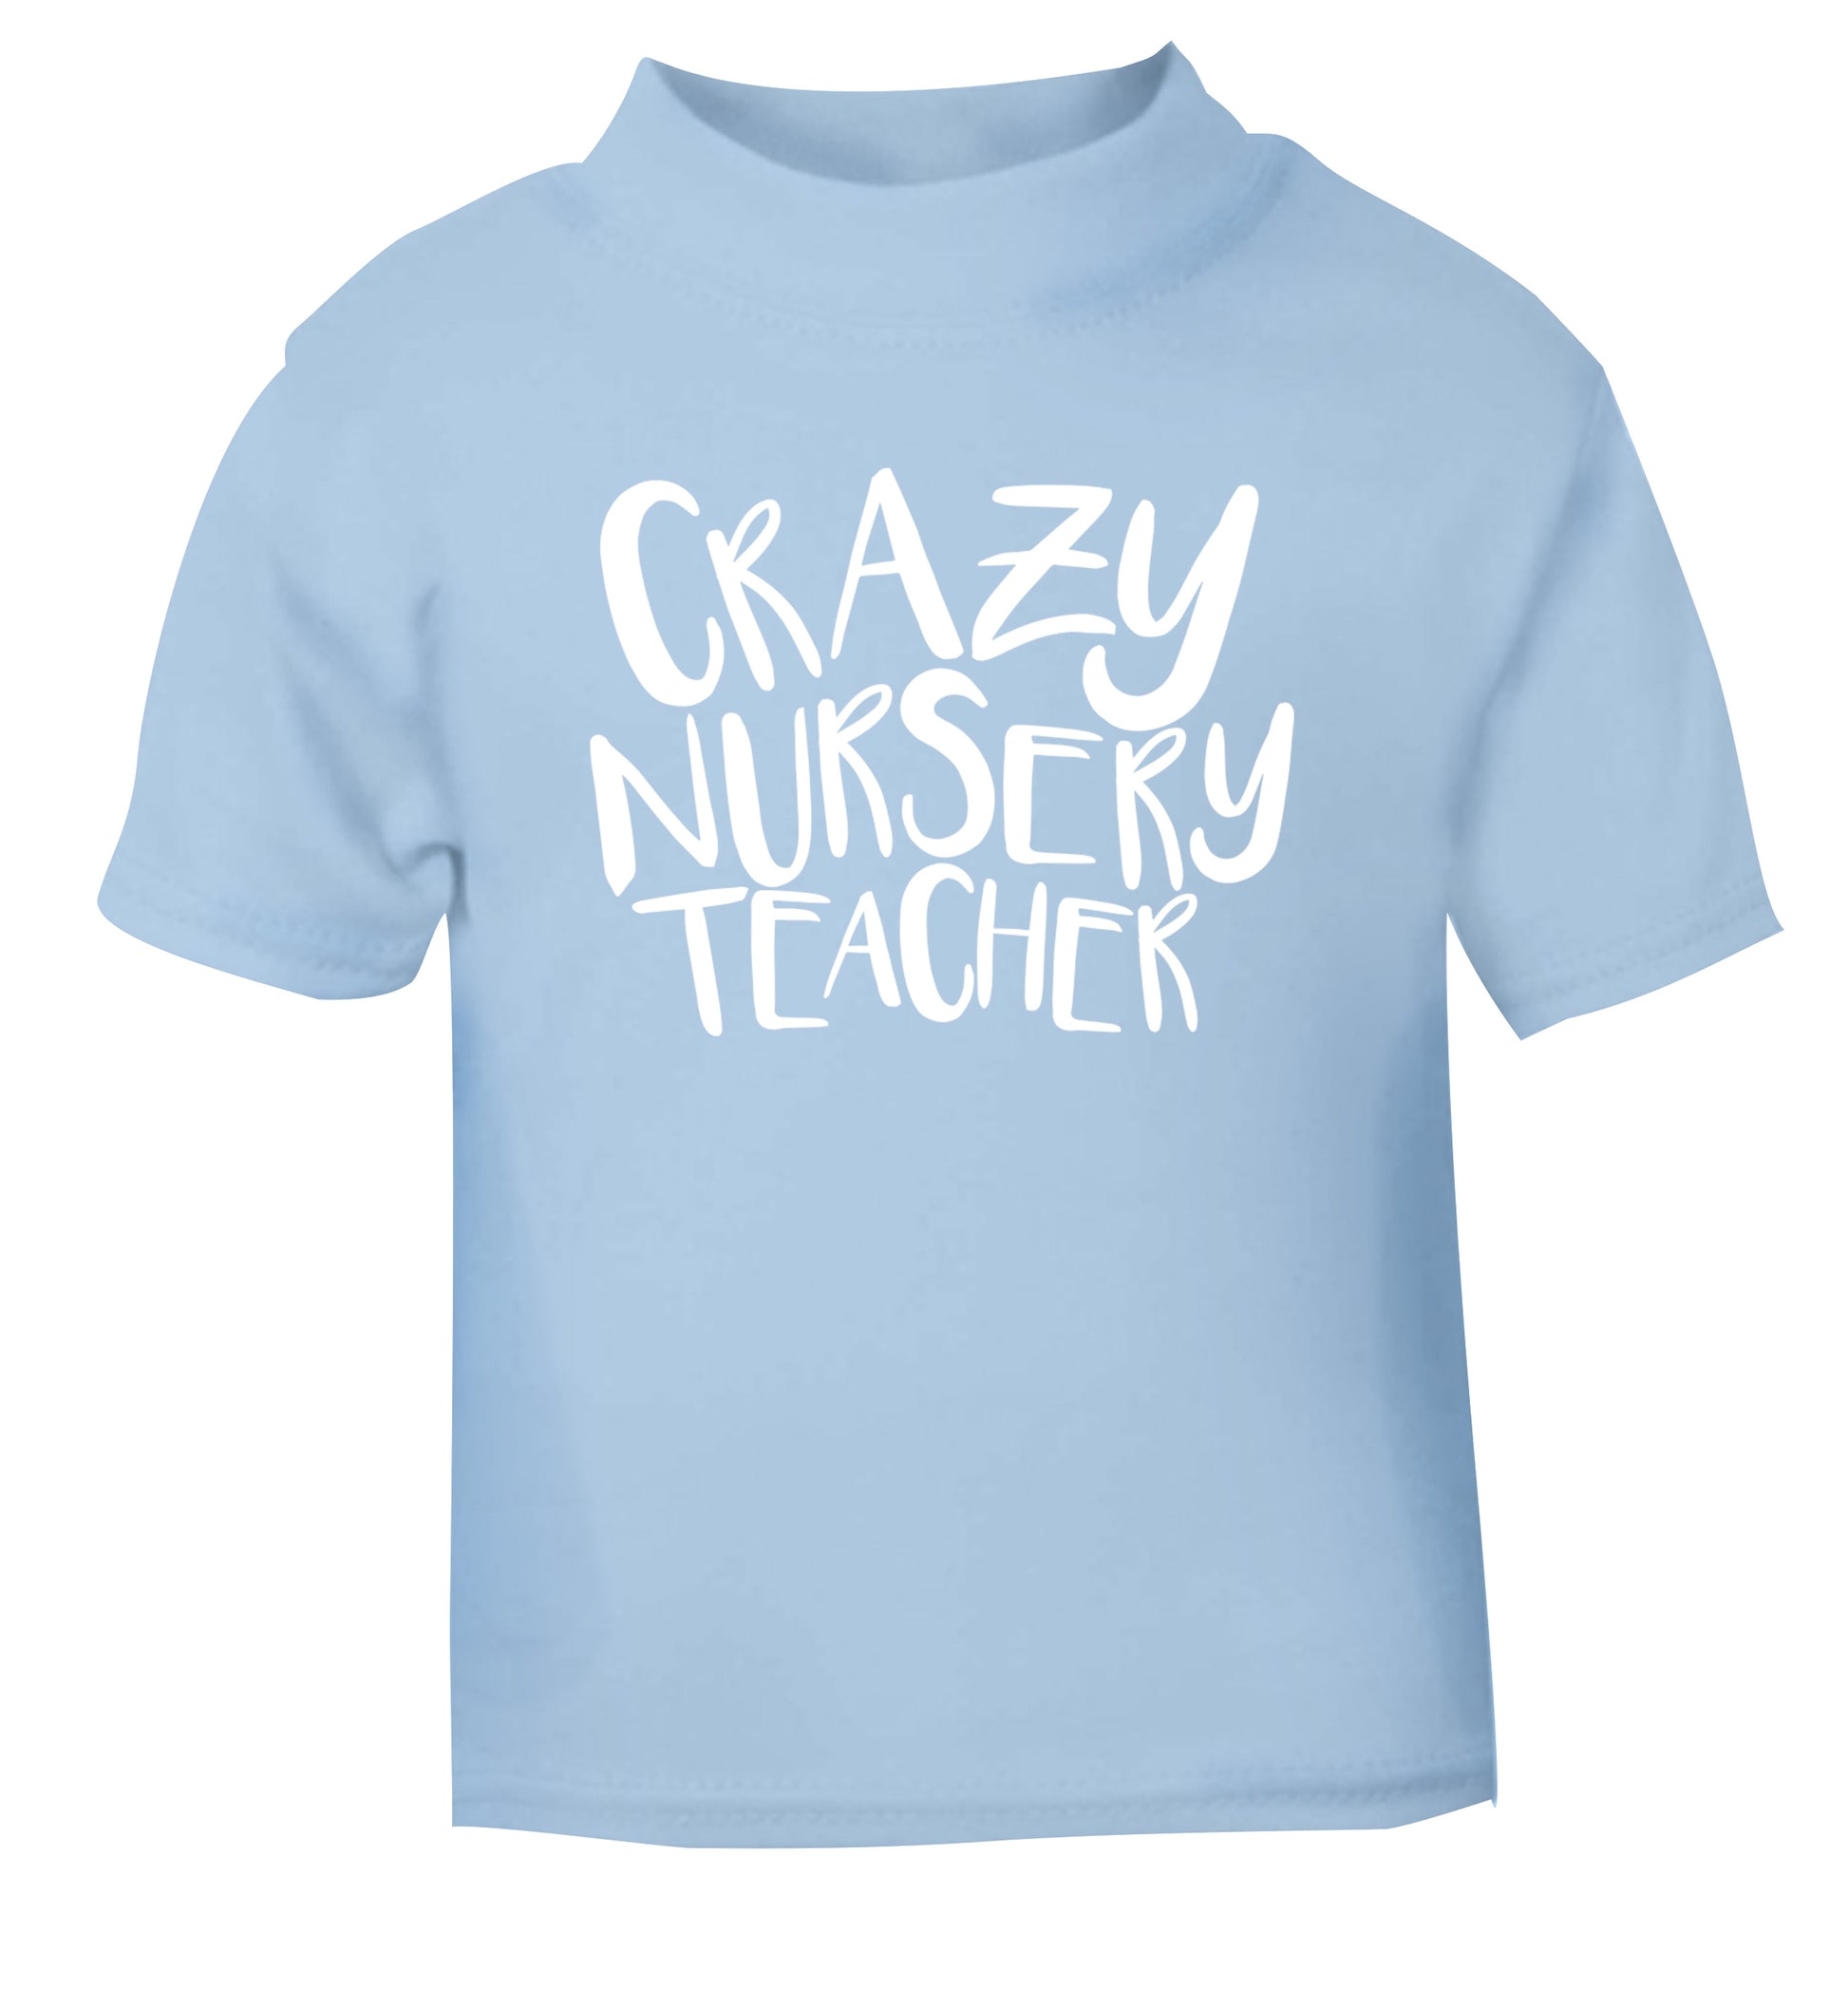 Crazy nursery teacher light blue Baby Toddler Tshirt 2 Years